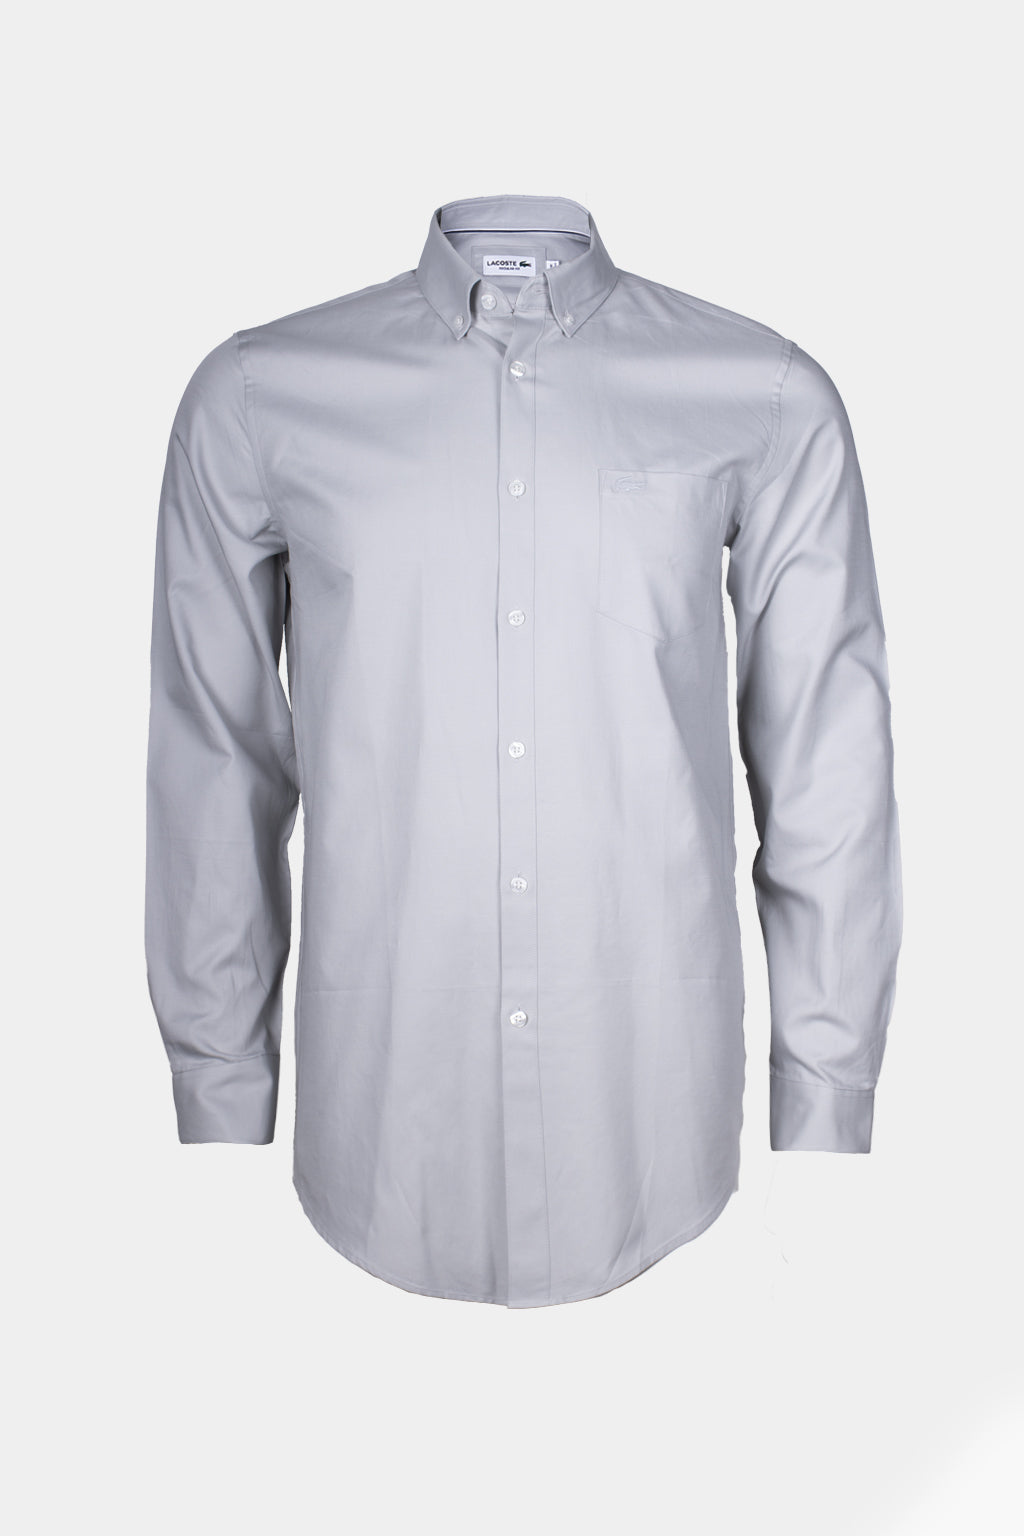 Lacoste - Men's Regular Fit Cotton Poplin Shirt